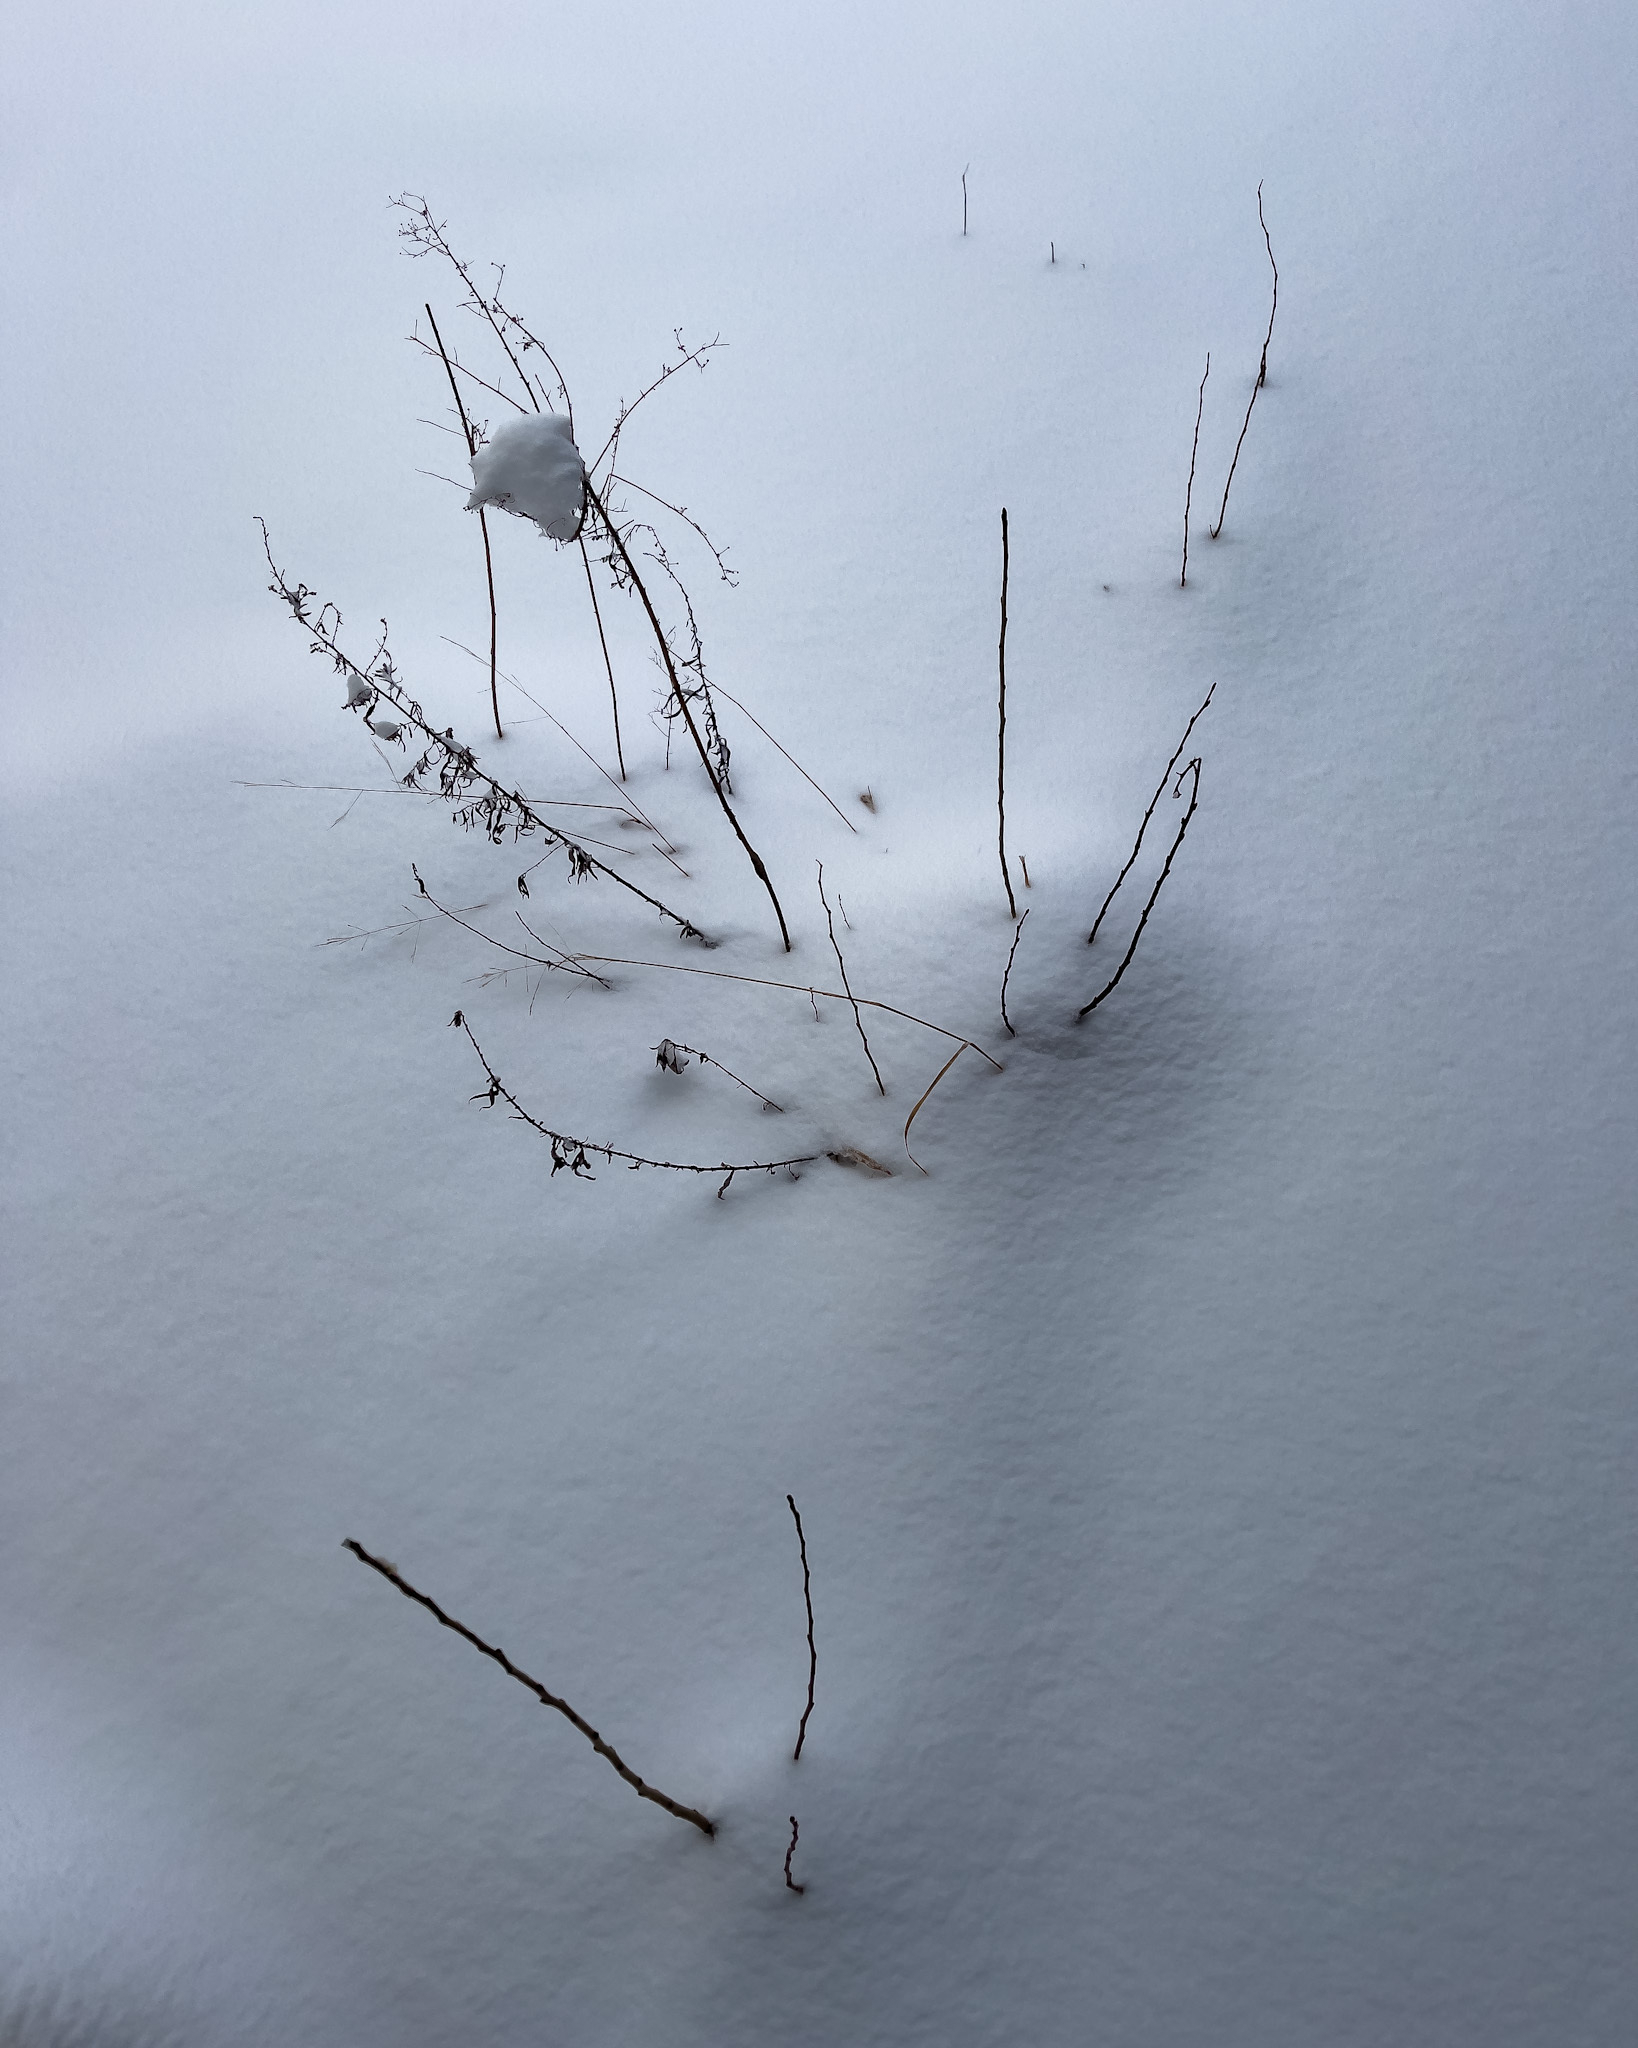 Weeds poking up through snow.